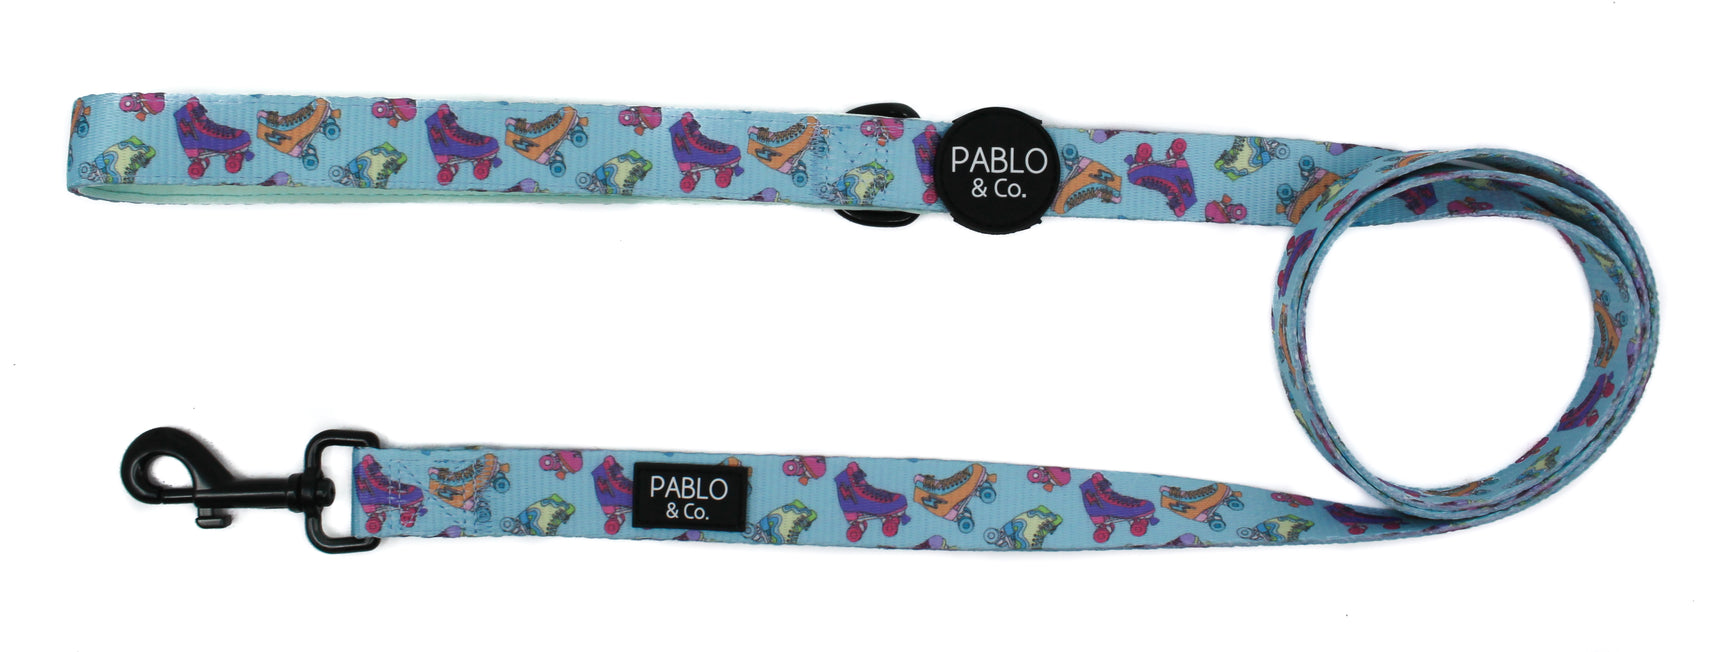 Pablo & Co - Roller Skates Leash - Henlo Pets